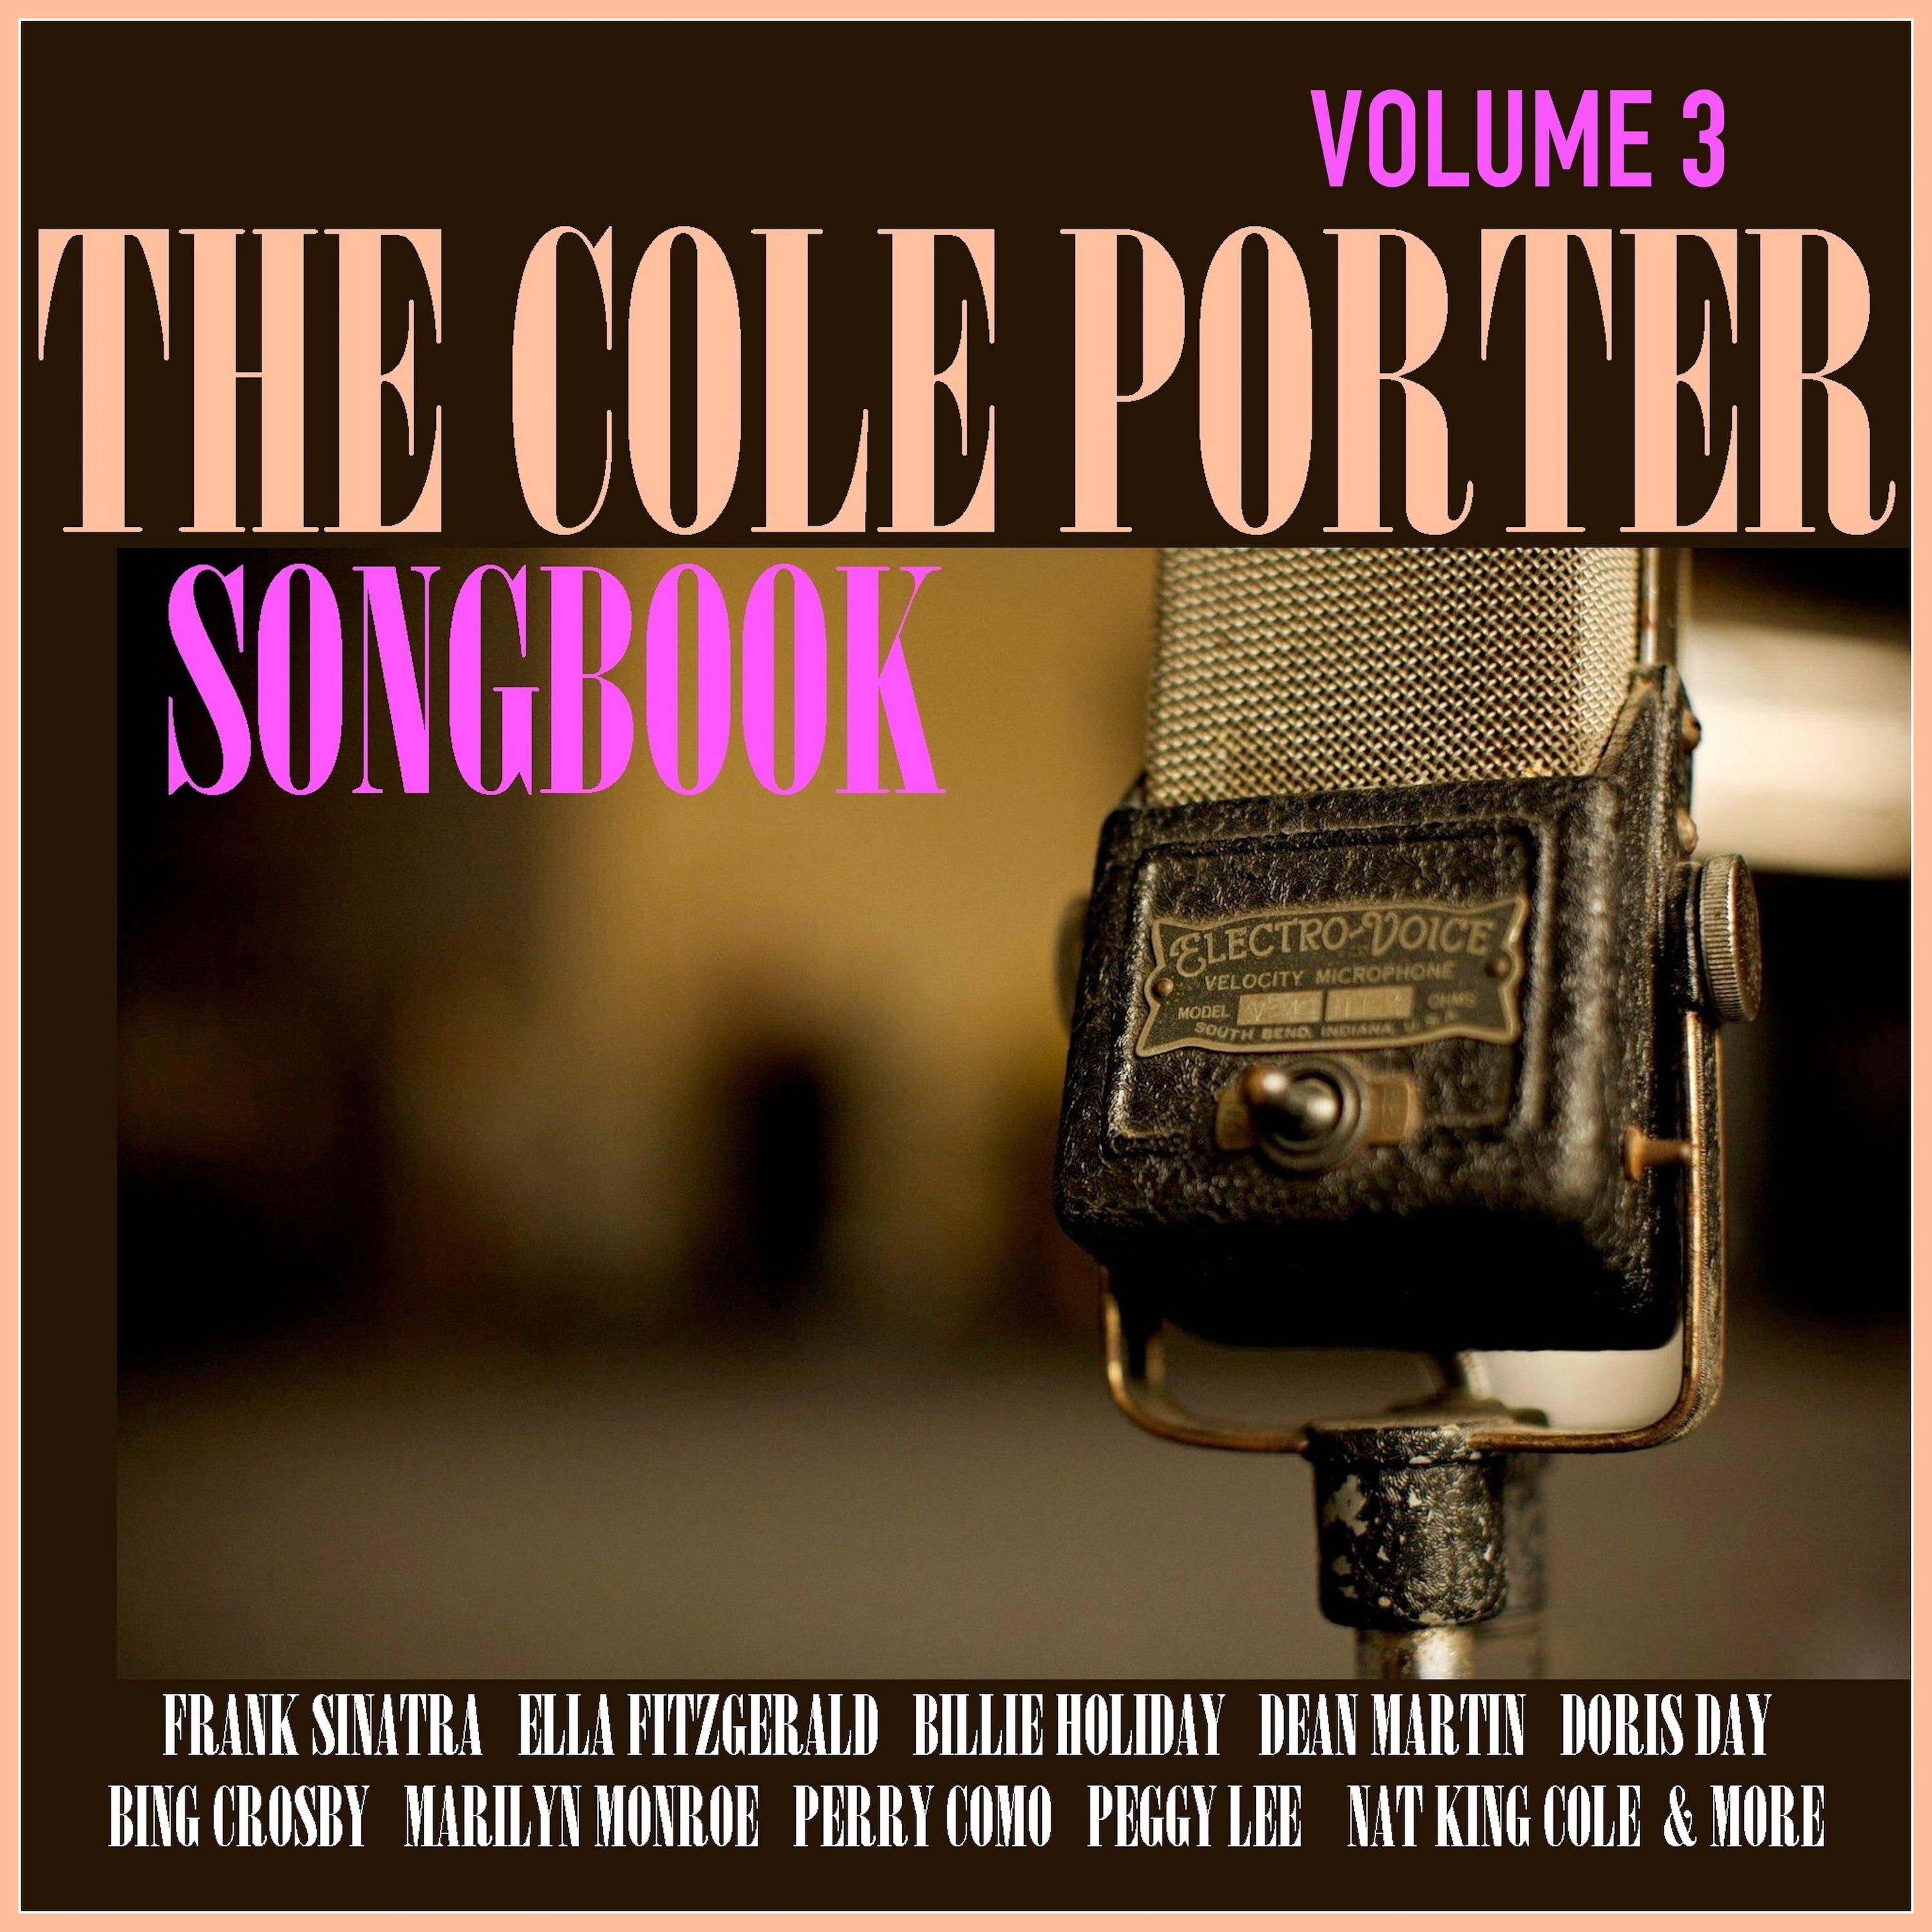 The Cole Porter Songbook, Volume 3